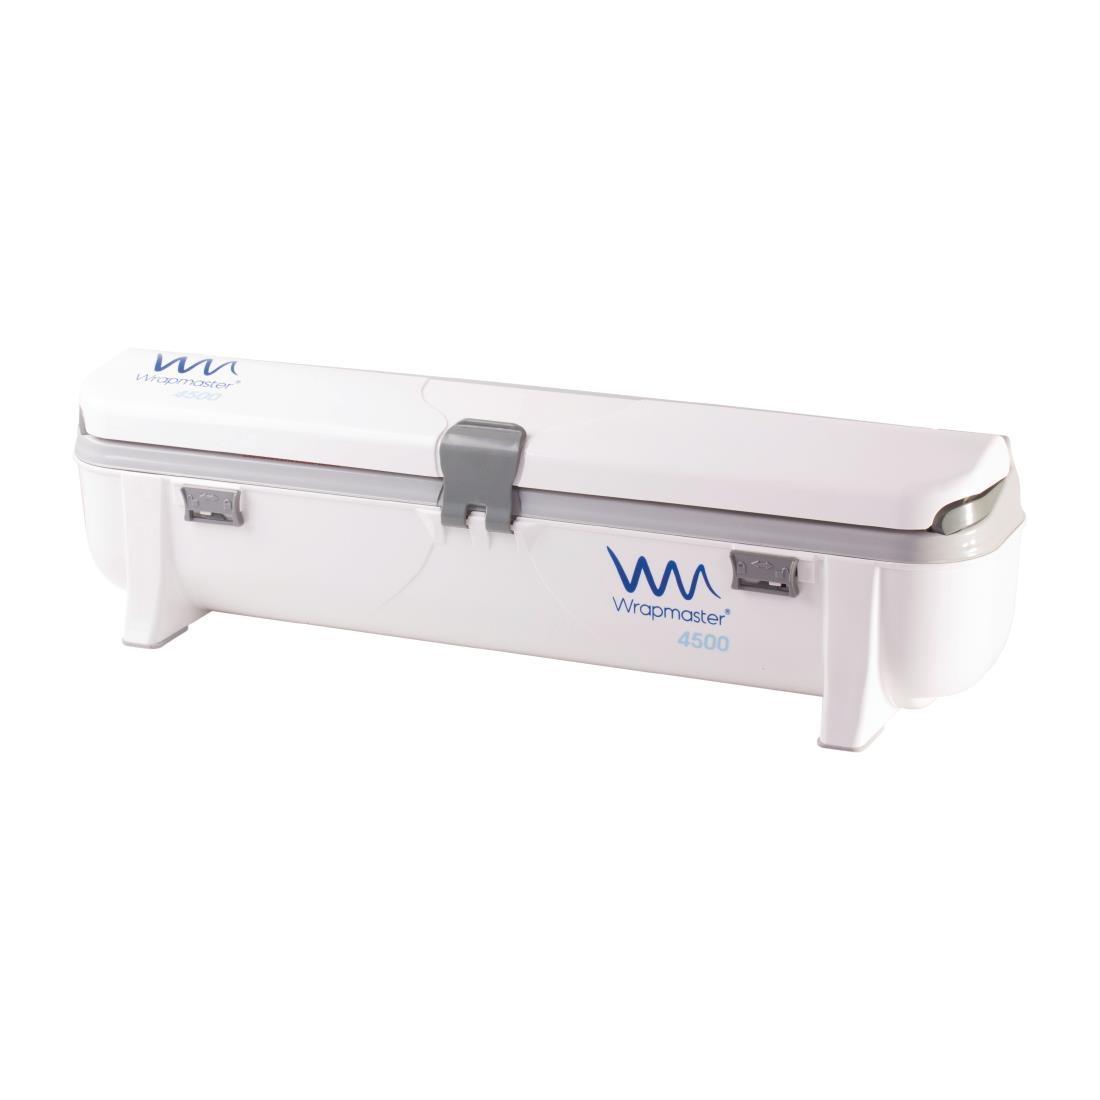 Wrapmaster 4500 Cling Film and Foil Dispenser - M802  - 3